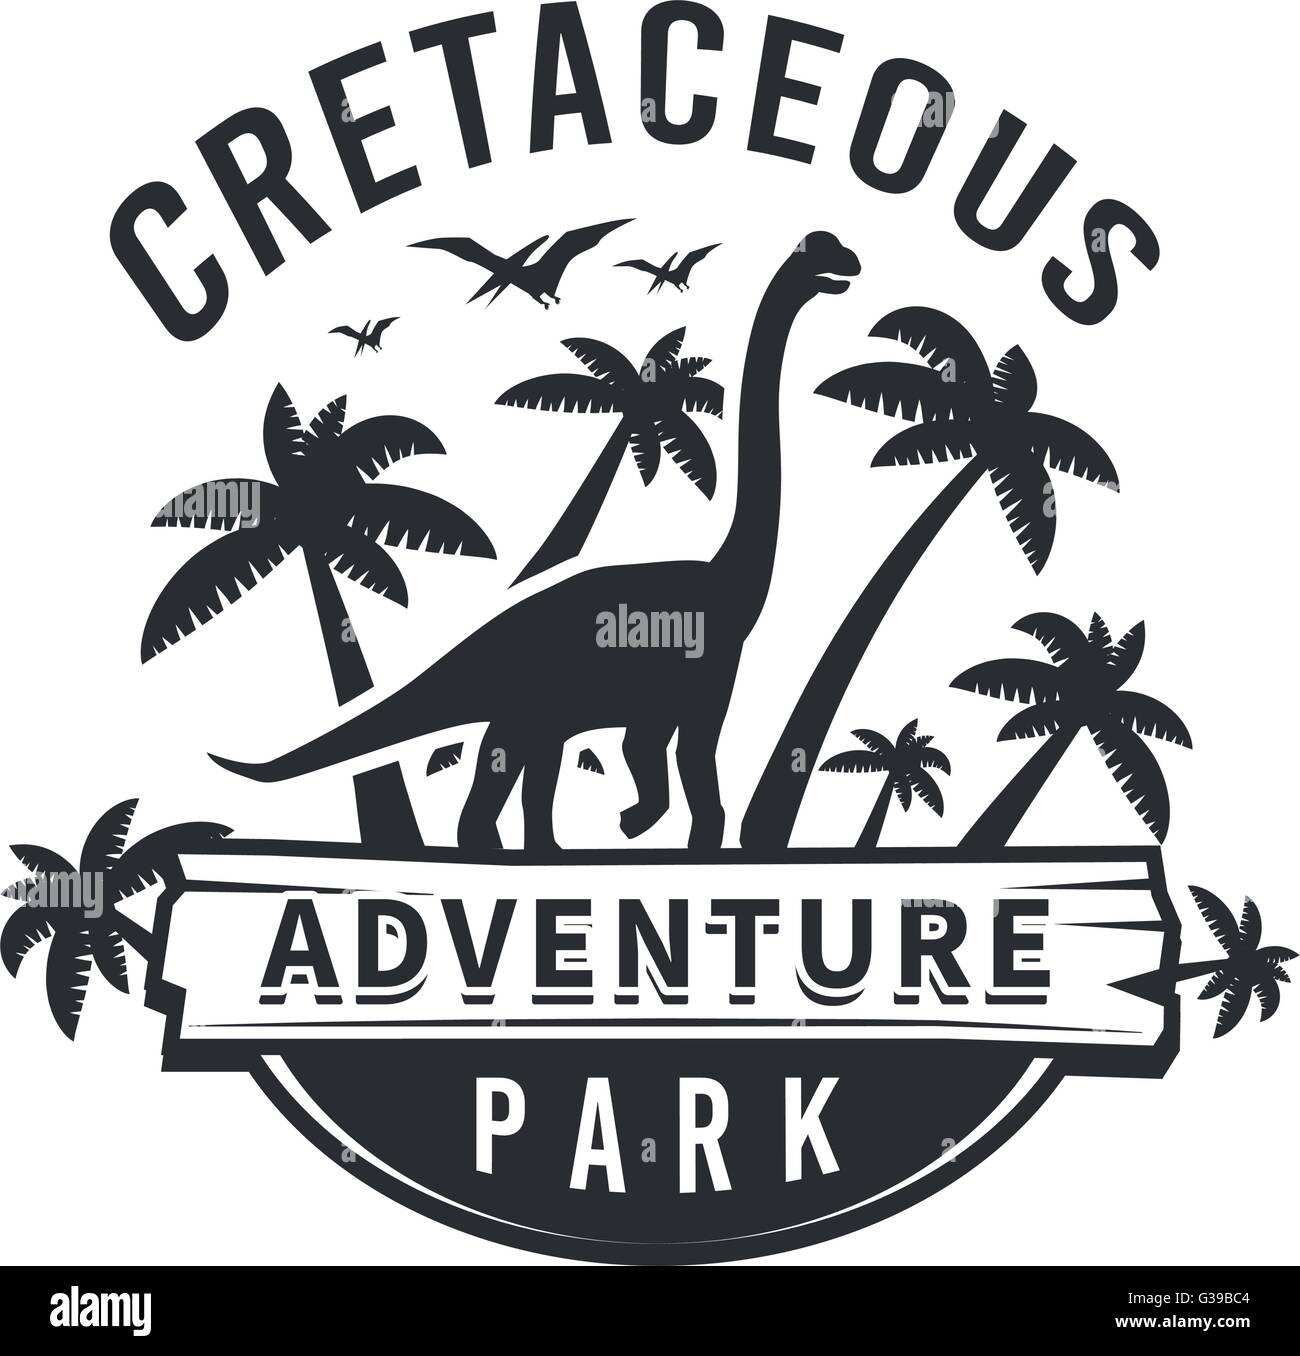 jurassic logo world dinosaur adventure logo brachiosaurus Vector concept. park